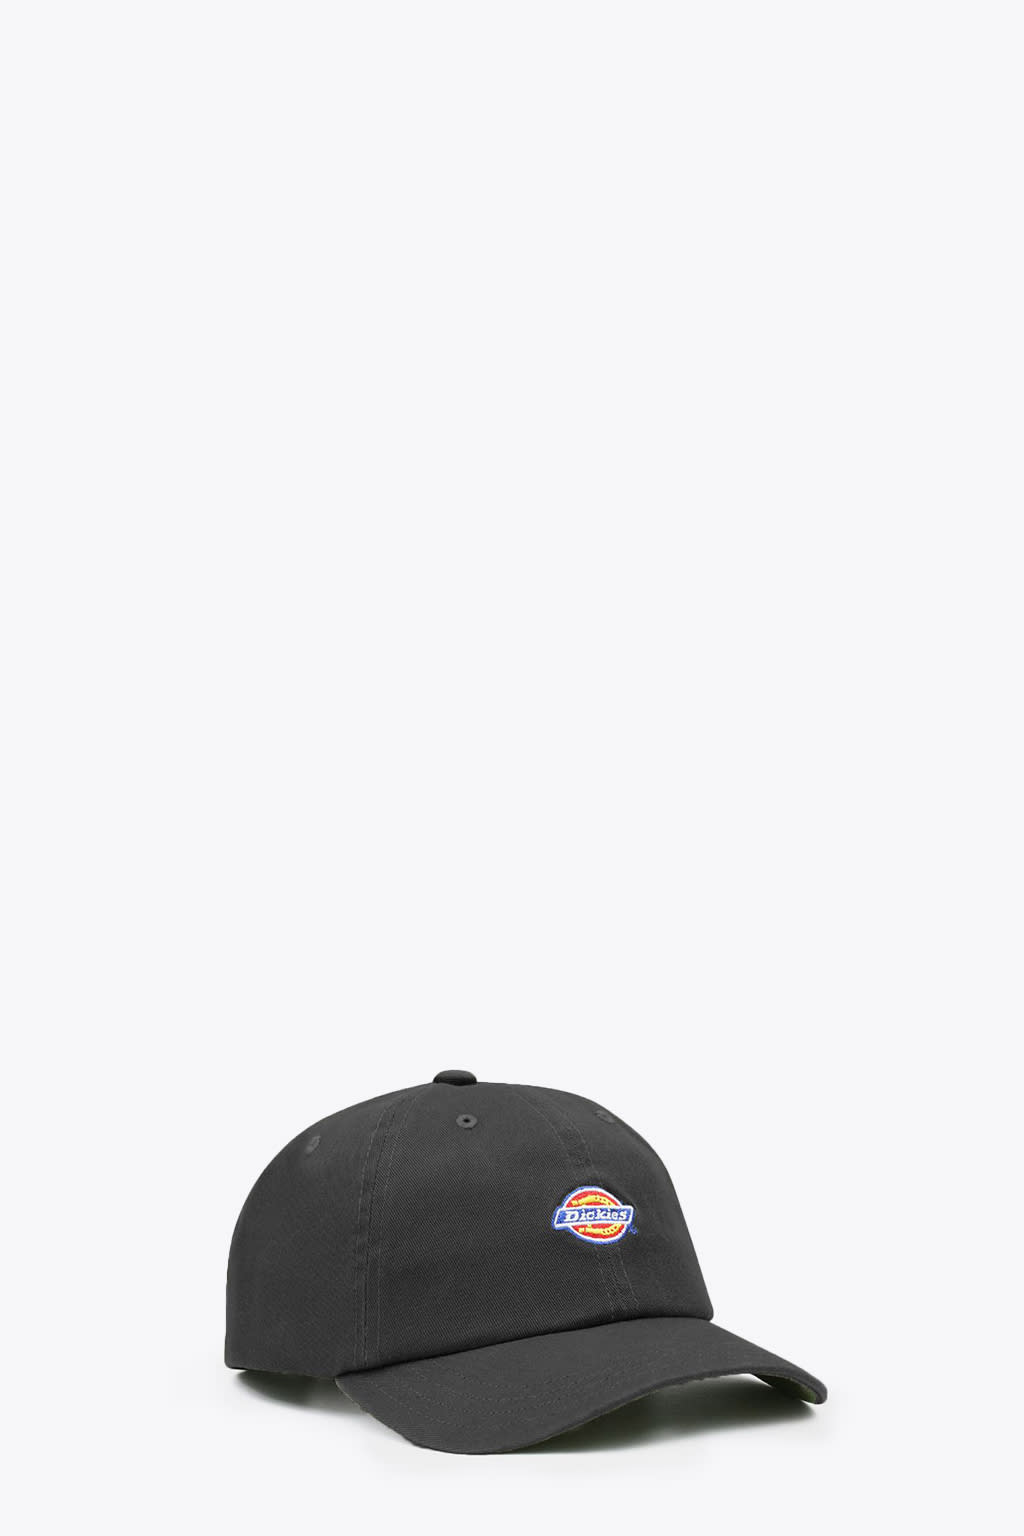 Dickies Hardwick Black cotton cap with logo - Hardwick